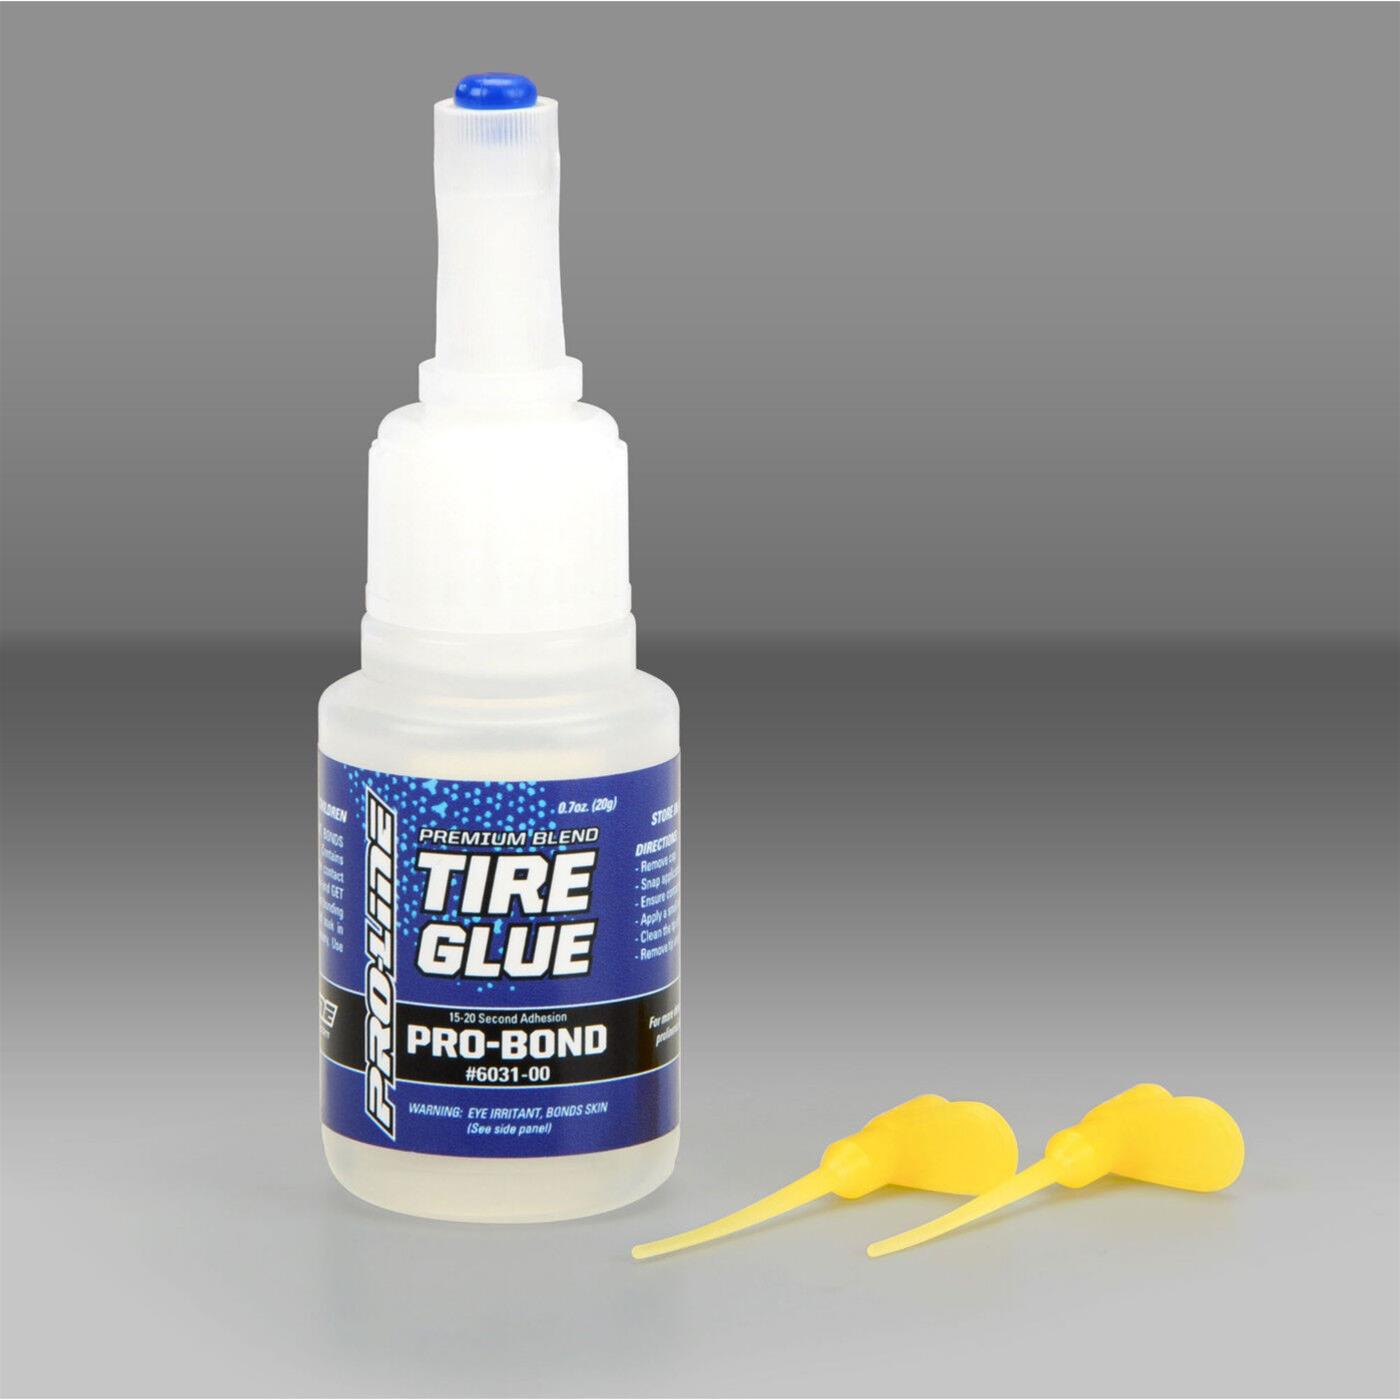 30ml Universal Tire Repair Tools Automotive Bicycle Vehicle Tire Glue  Cement Rubber Repair Tool Tyre Repair Glue